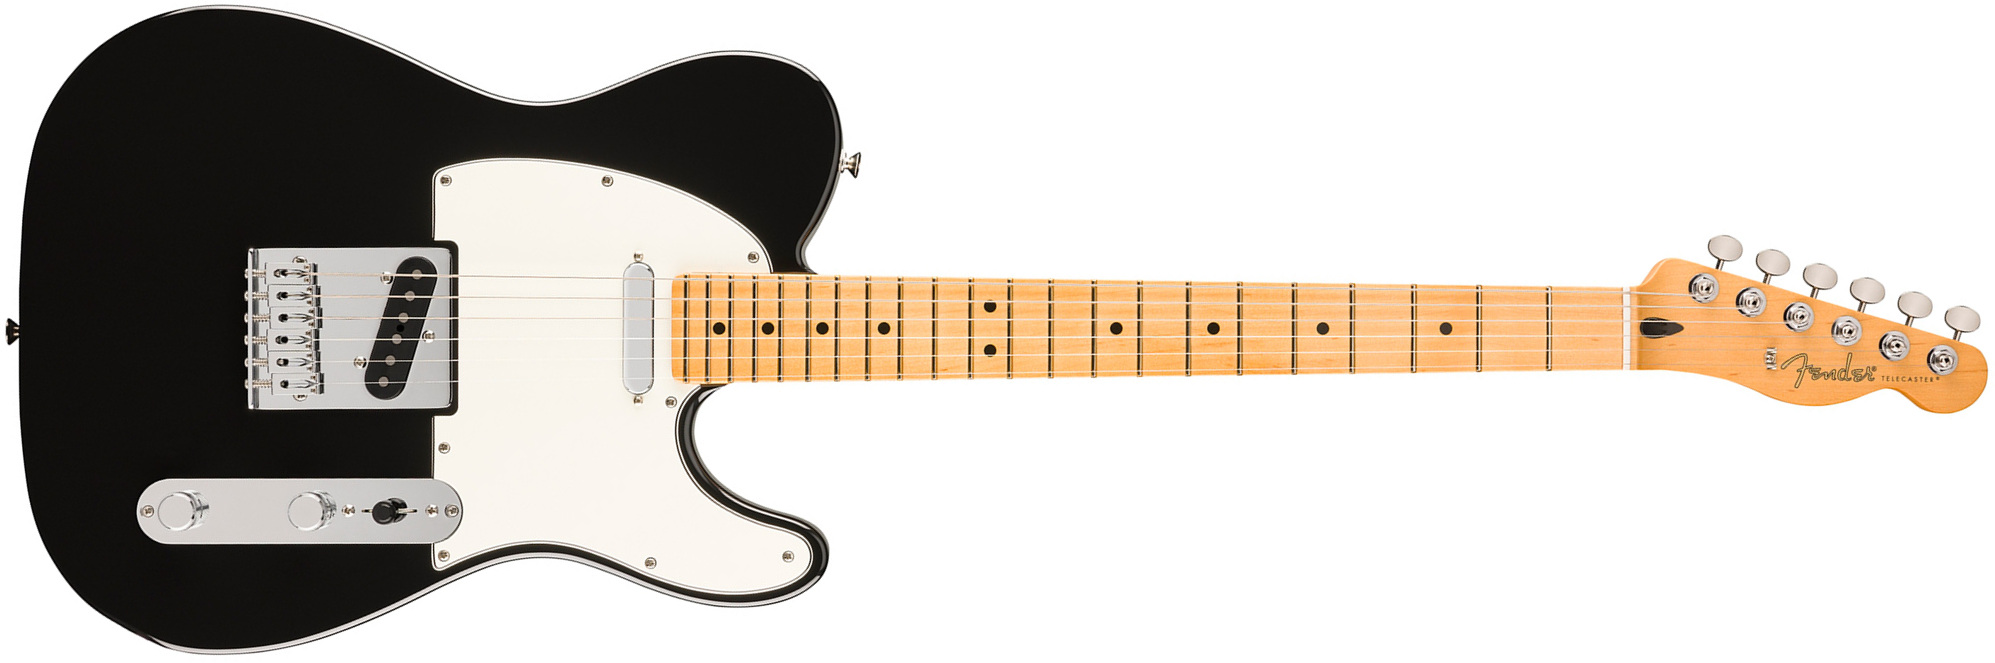 Fender Tele Player Ii Mex Aulne 2s Ht Mn - Black - Televorm elektrische gitaar - Main picture